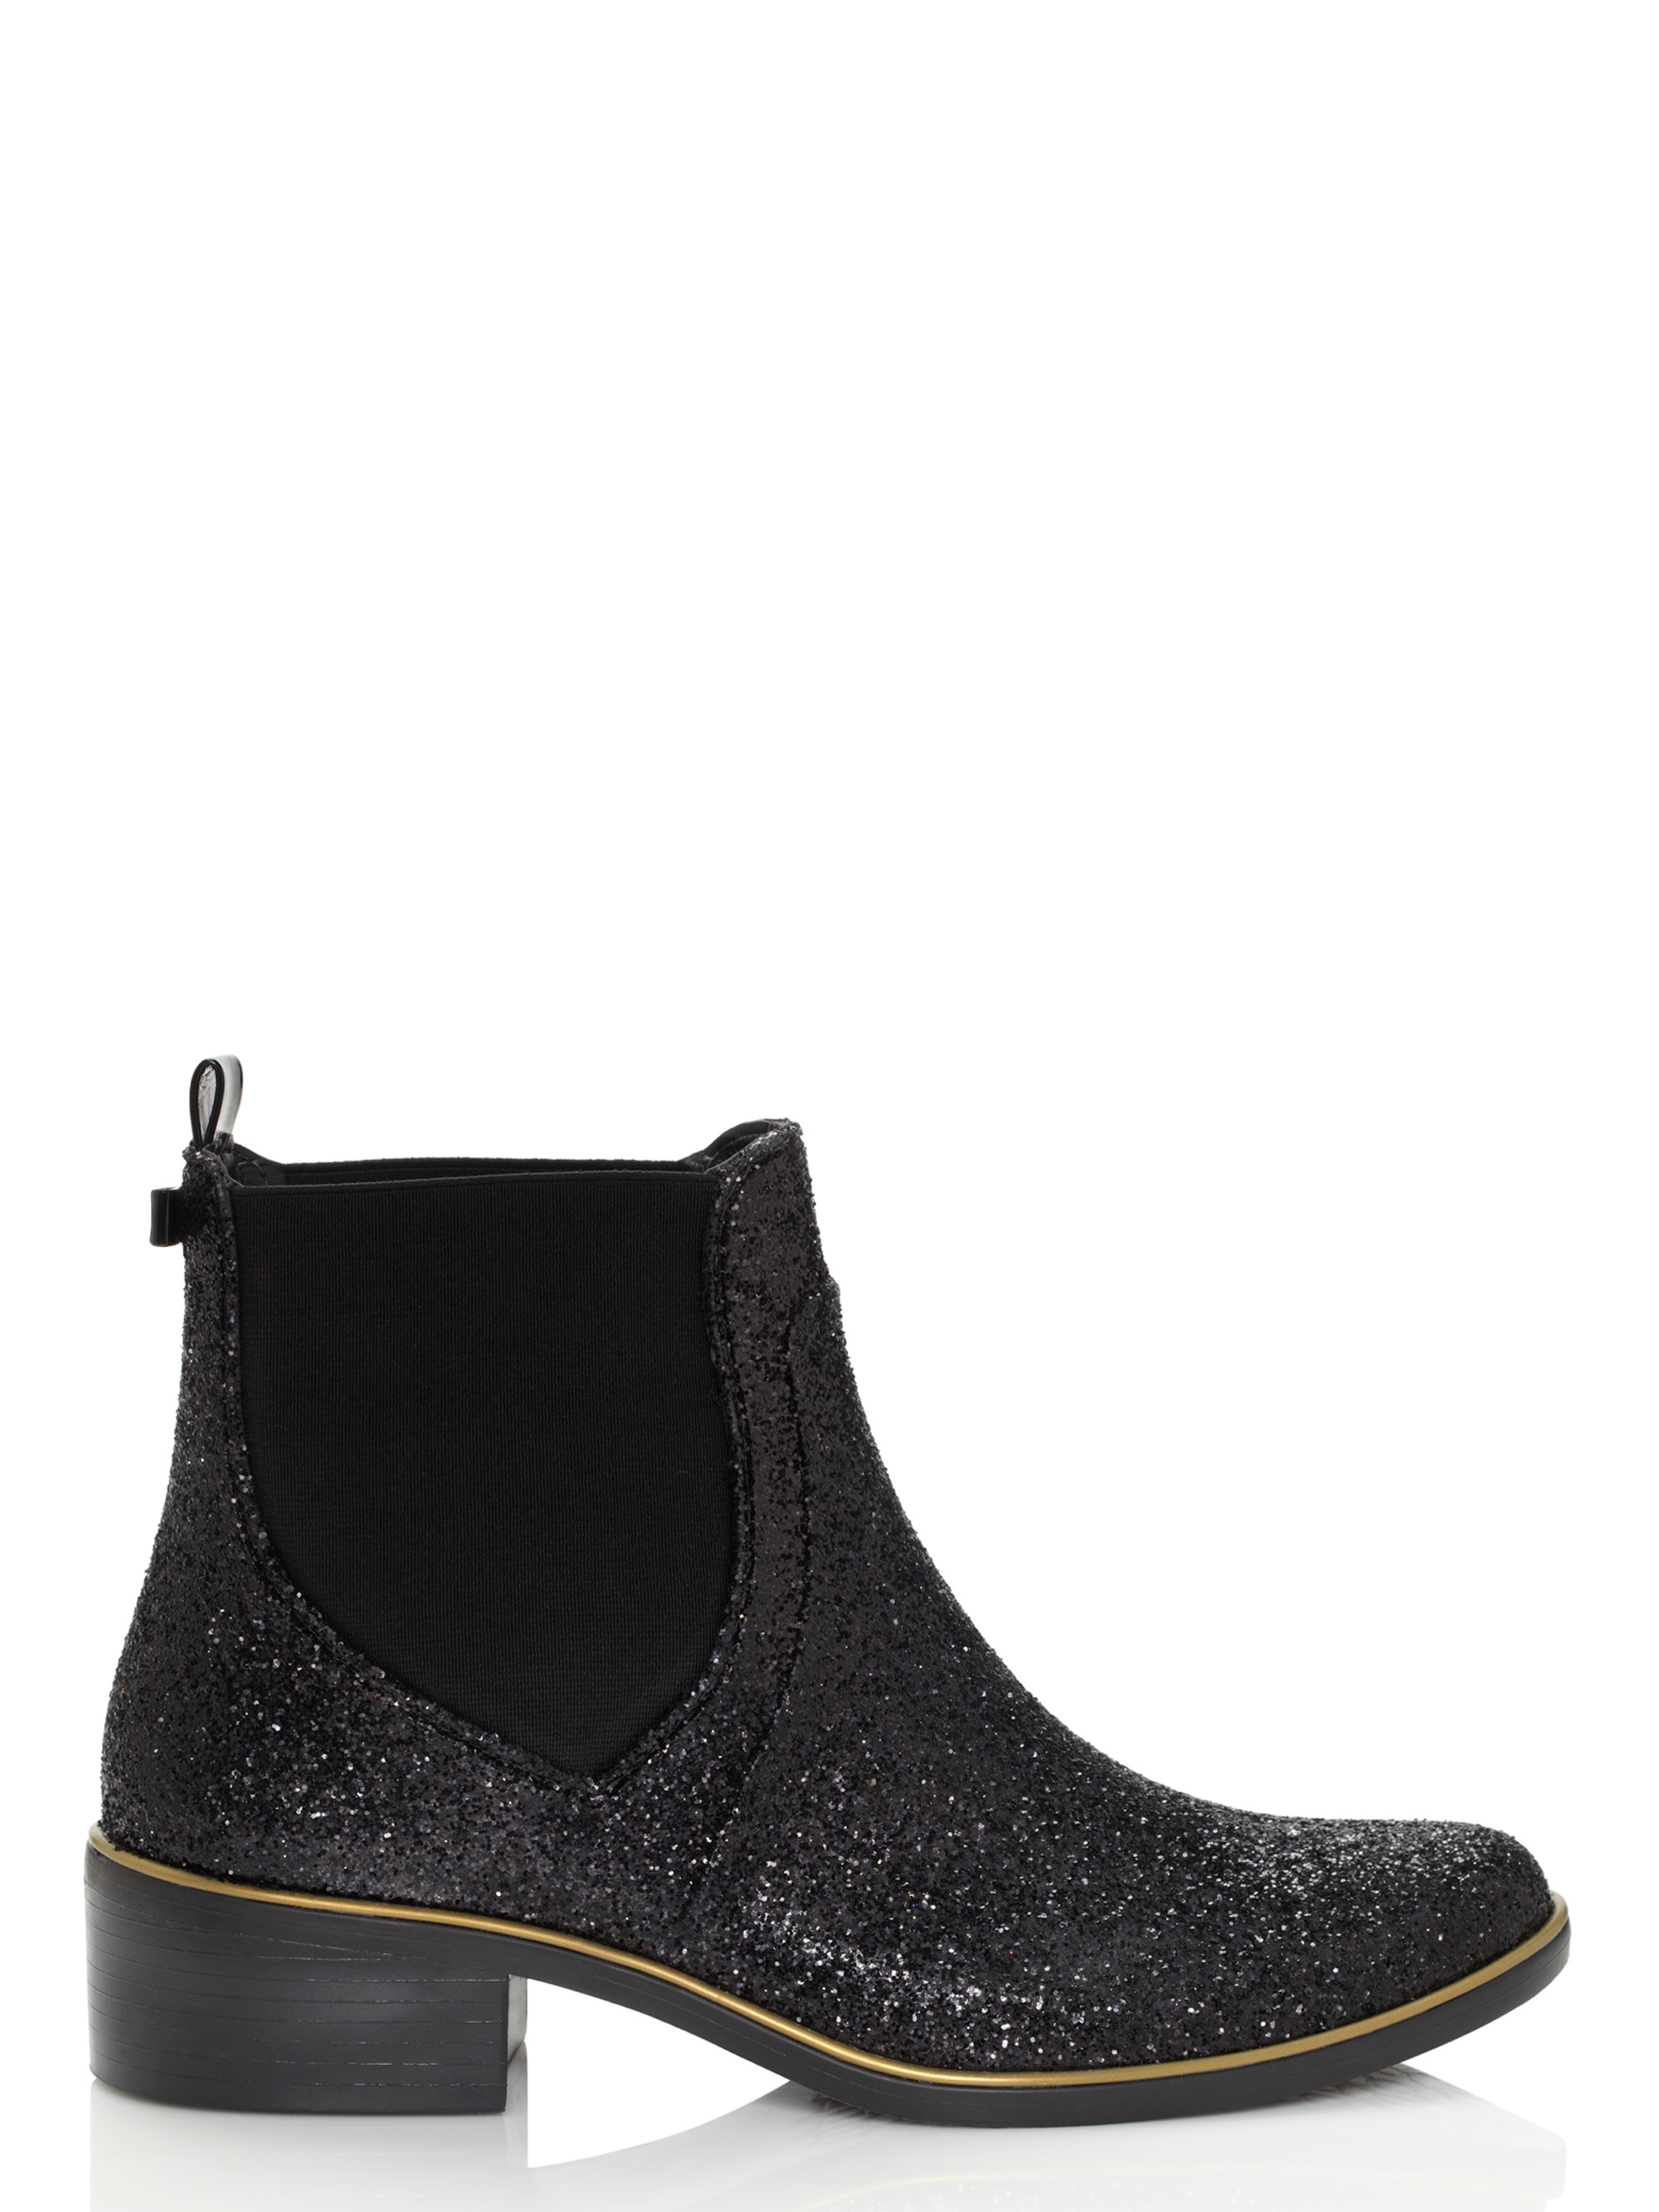 Kate spade new york Sedgewick Glitter Rain Boots in Black | Lyst2000 x 2666